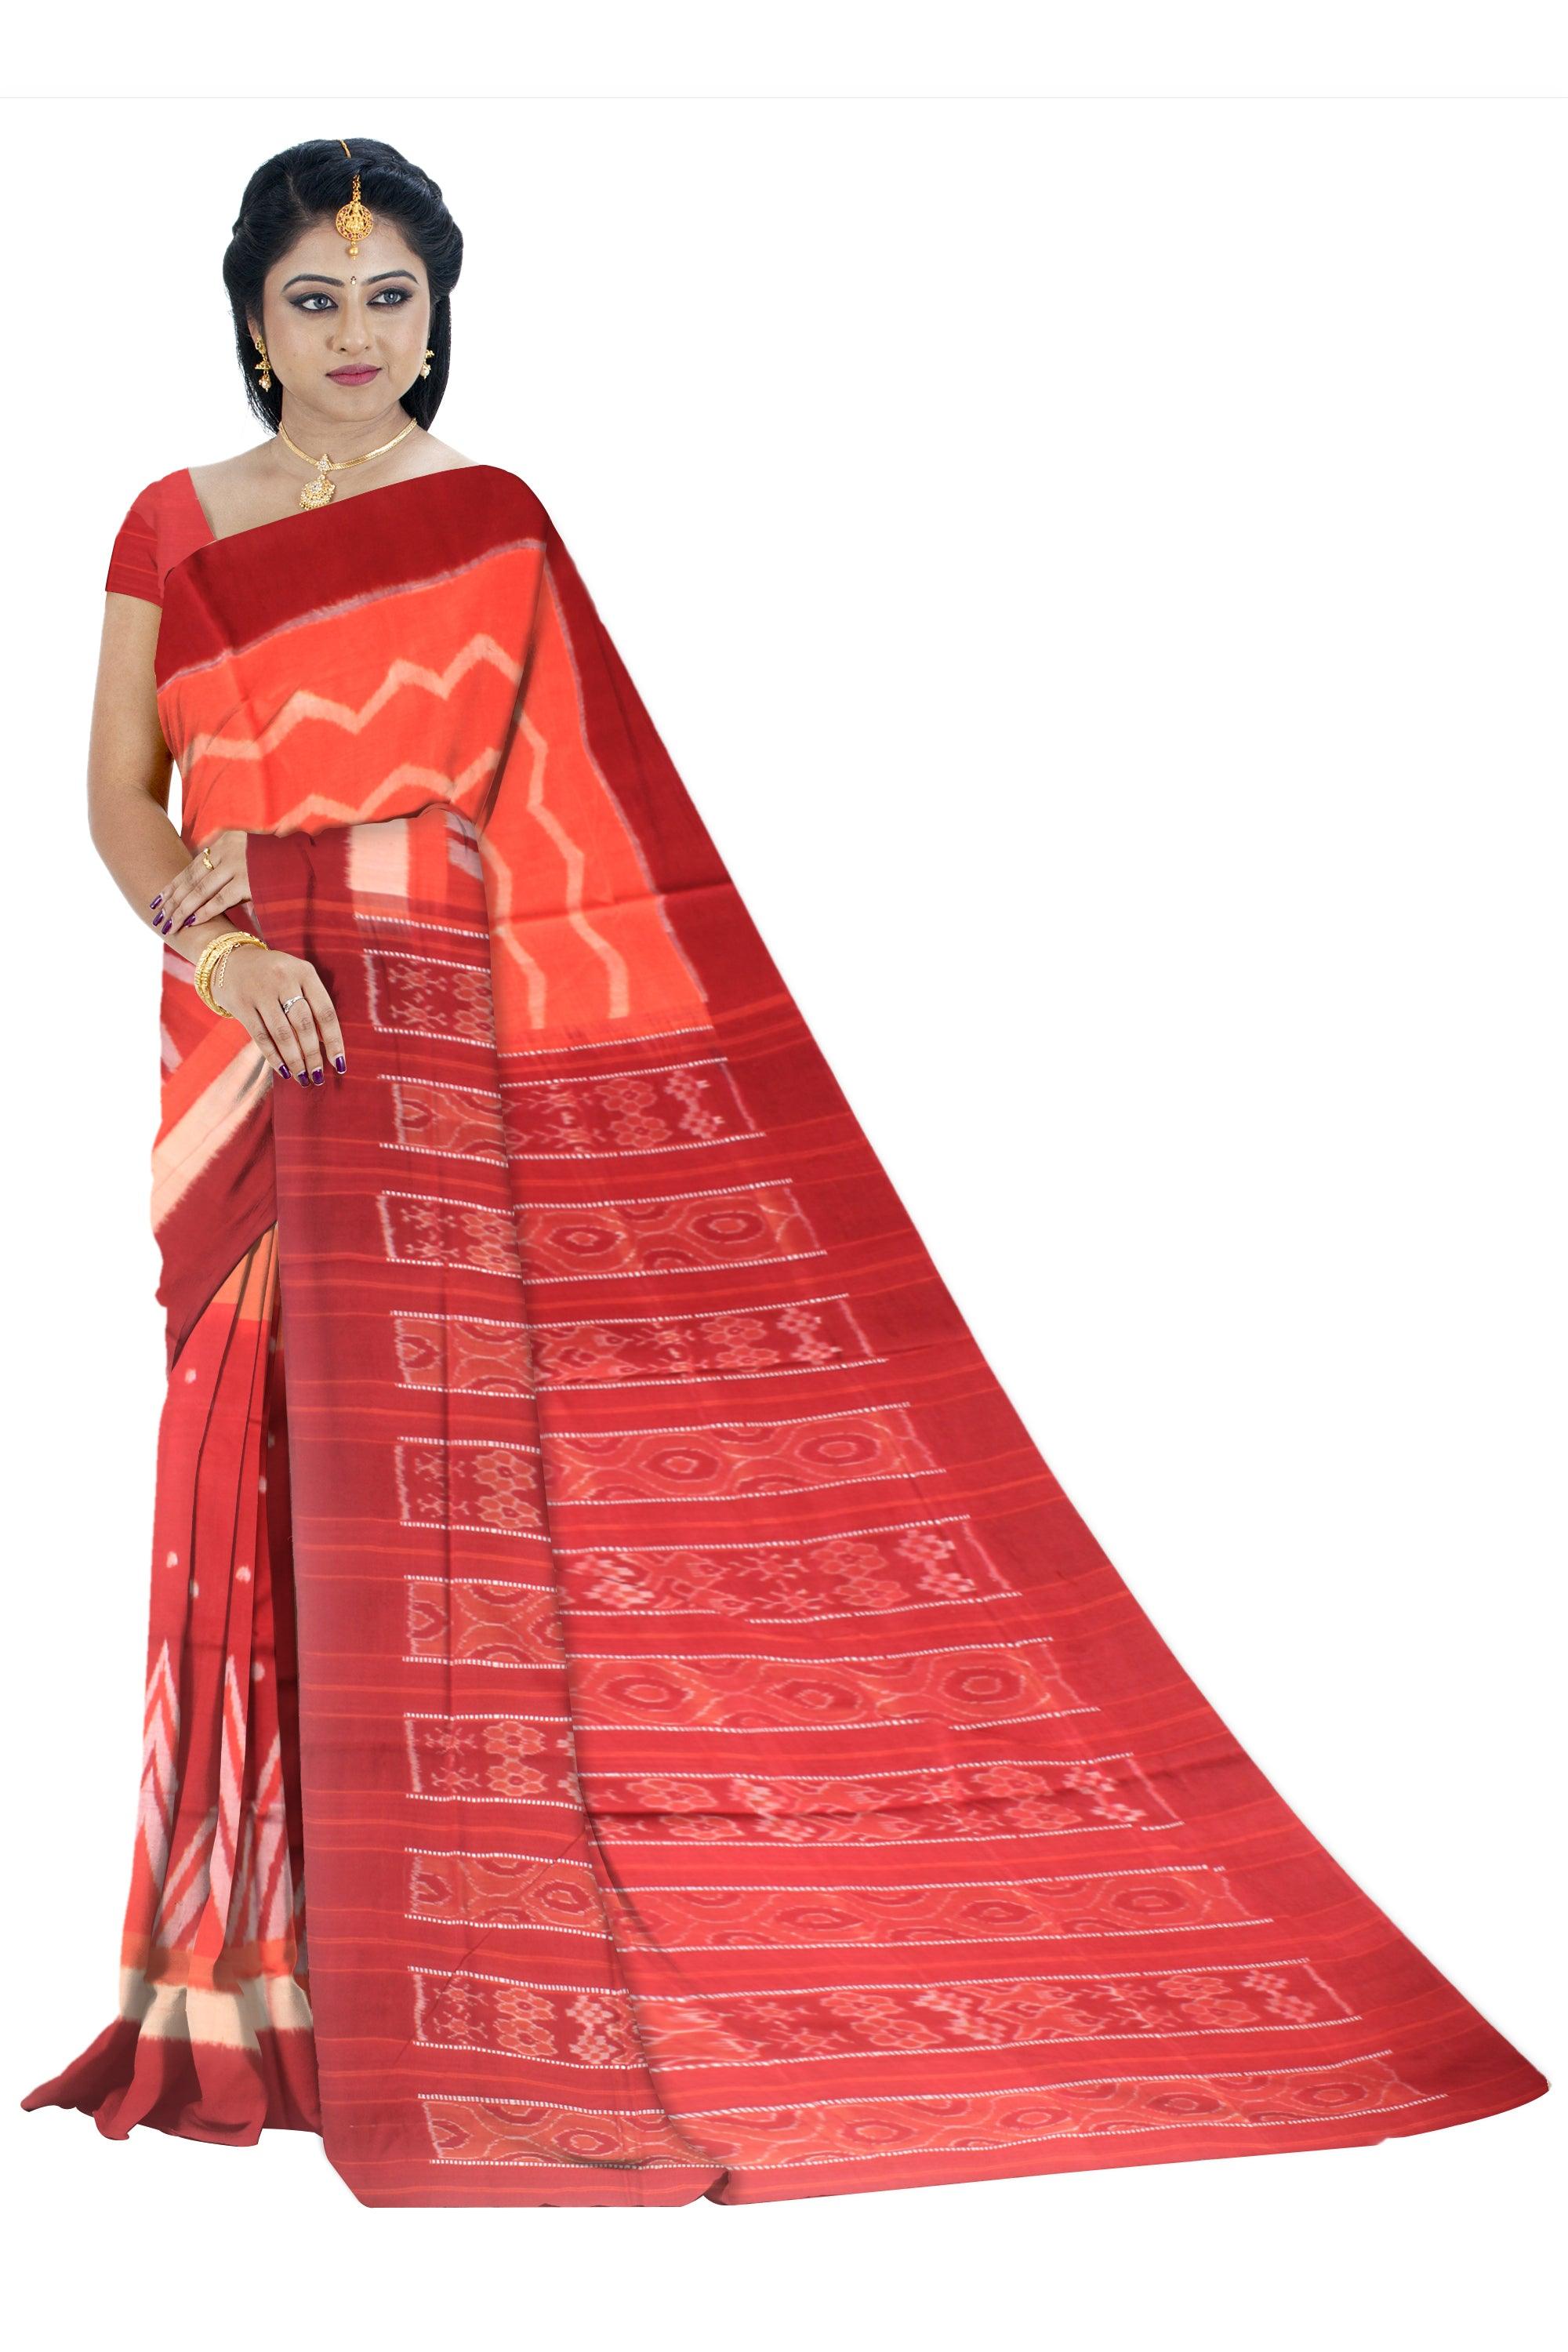 Sambalpuri cotton saree in orange and maroon color with blouse piece. - Koshali Arts & Crafts Enterprise